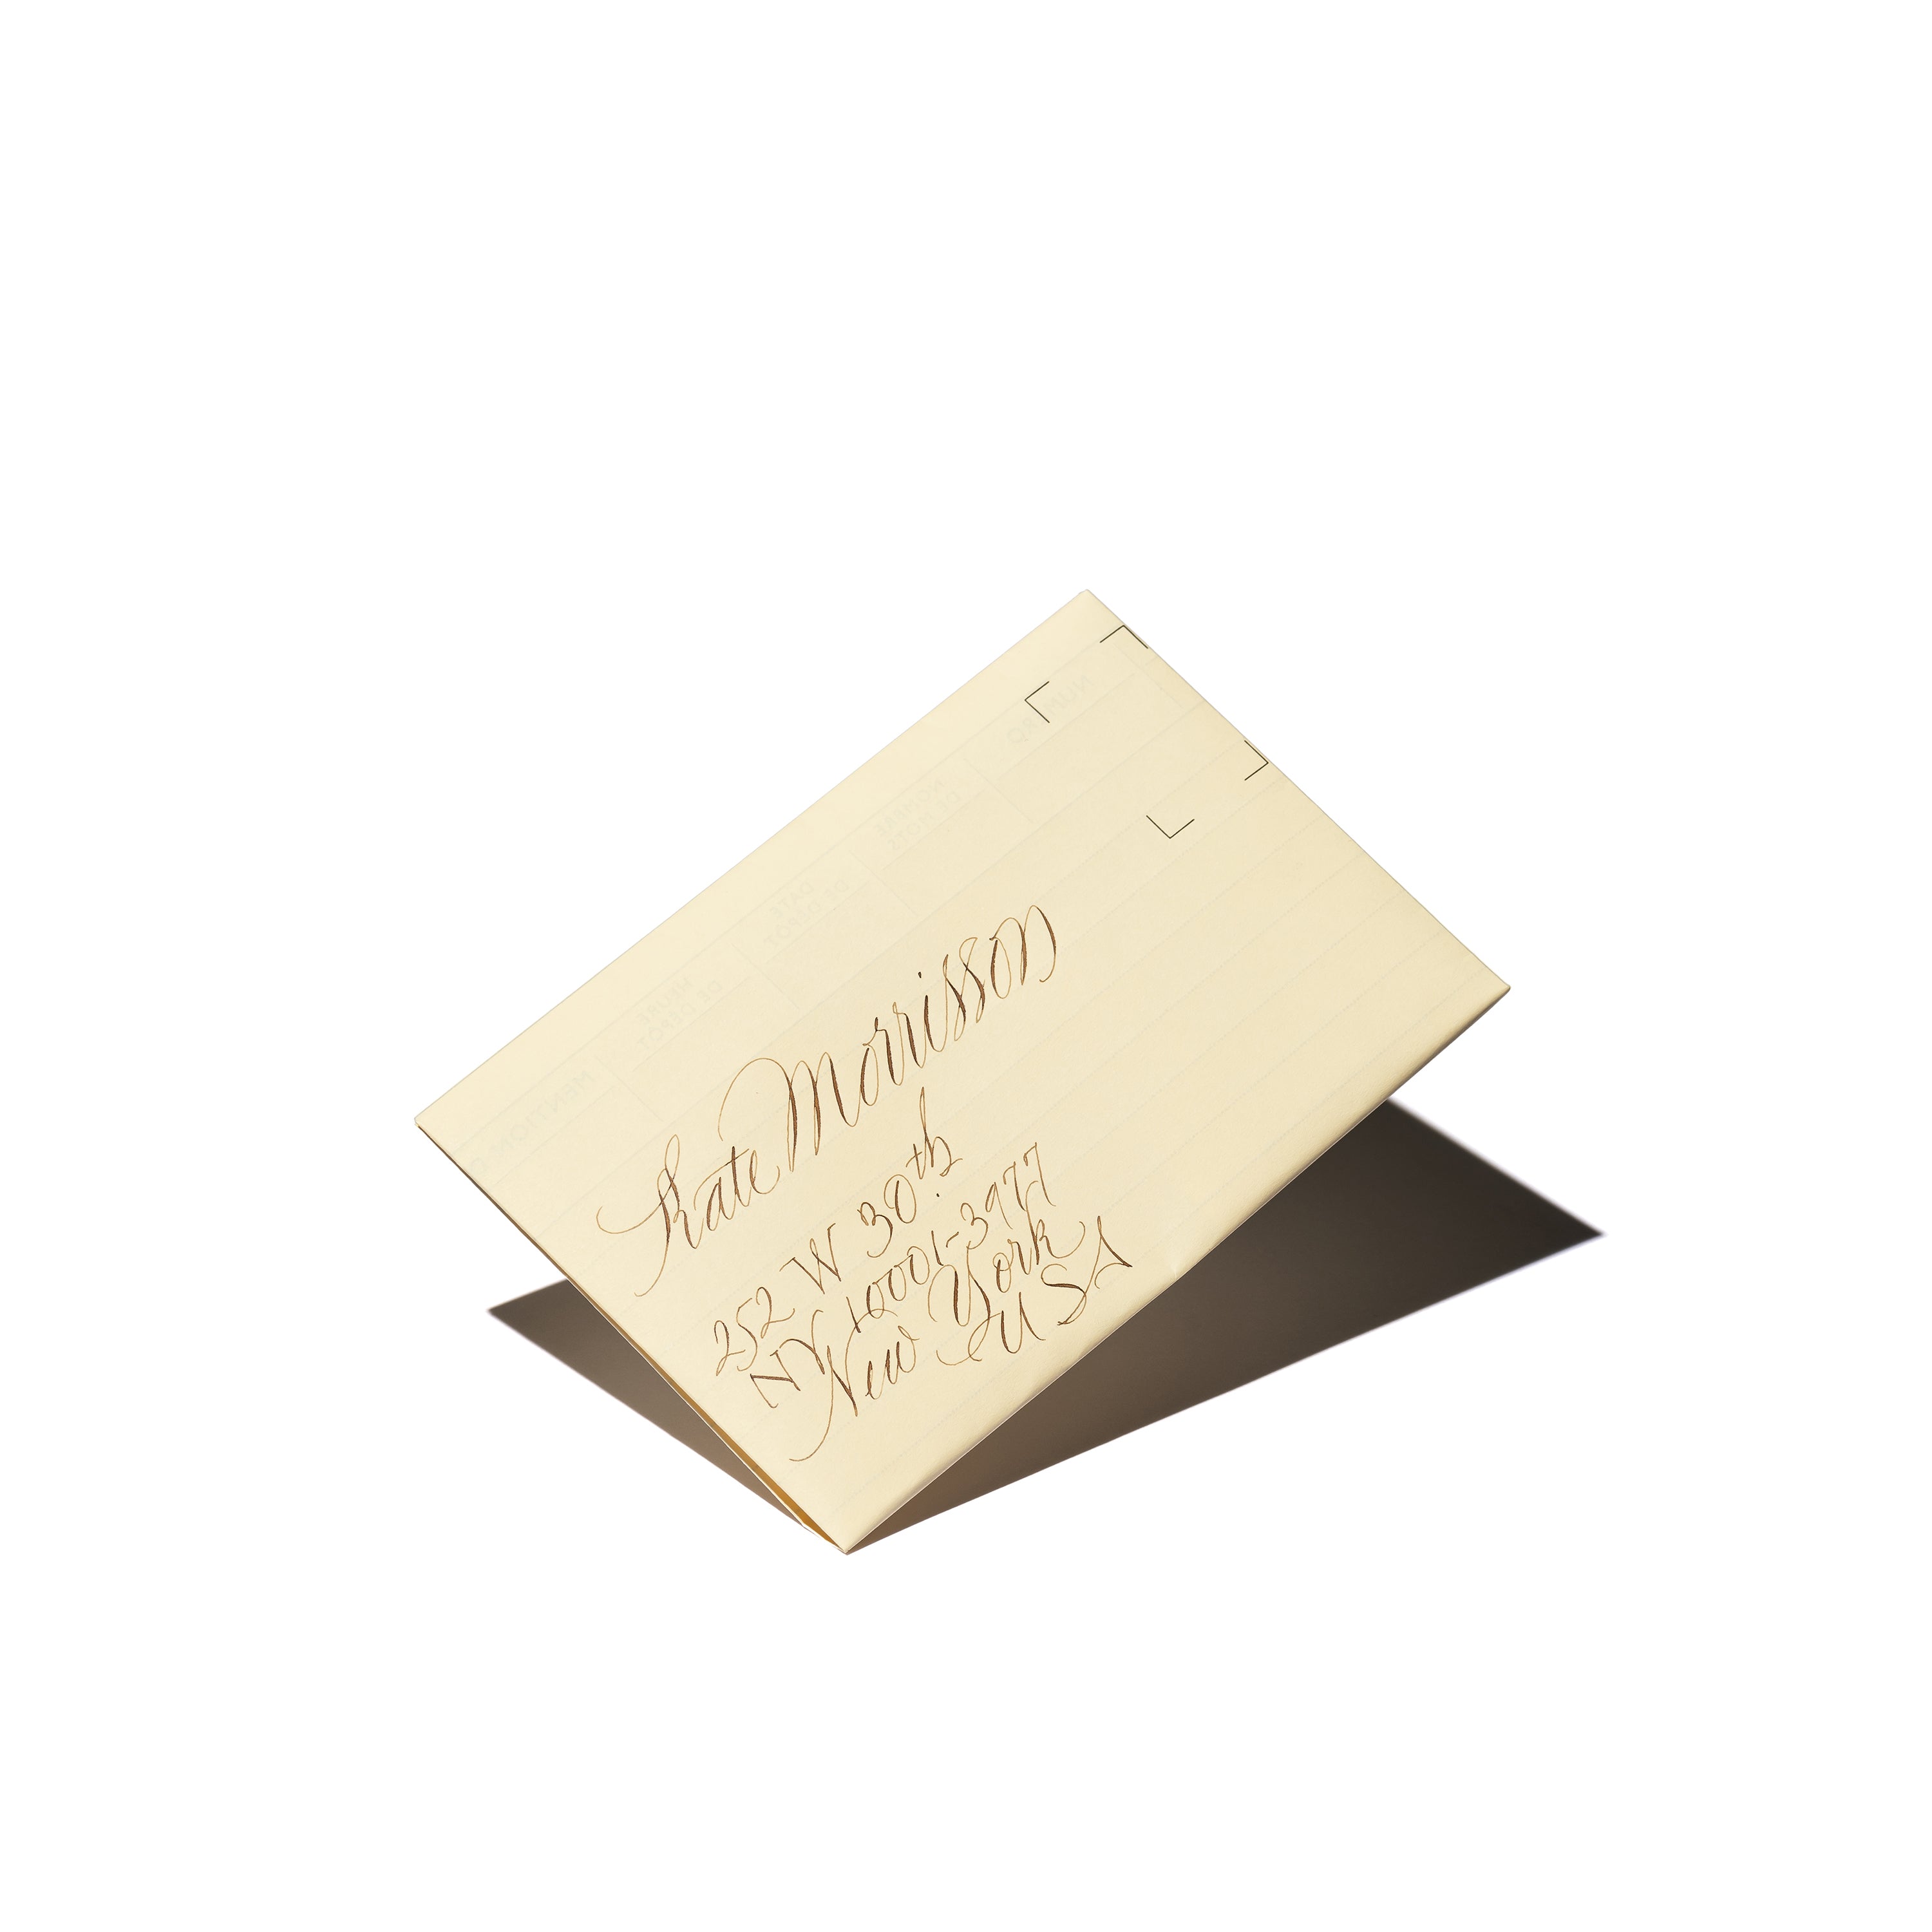 Calligraphy telegram